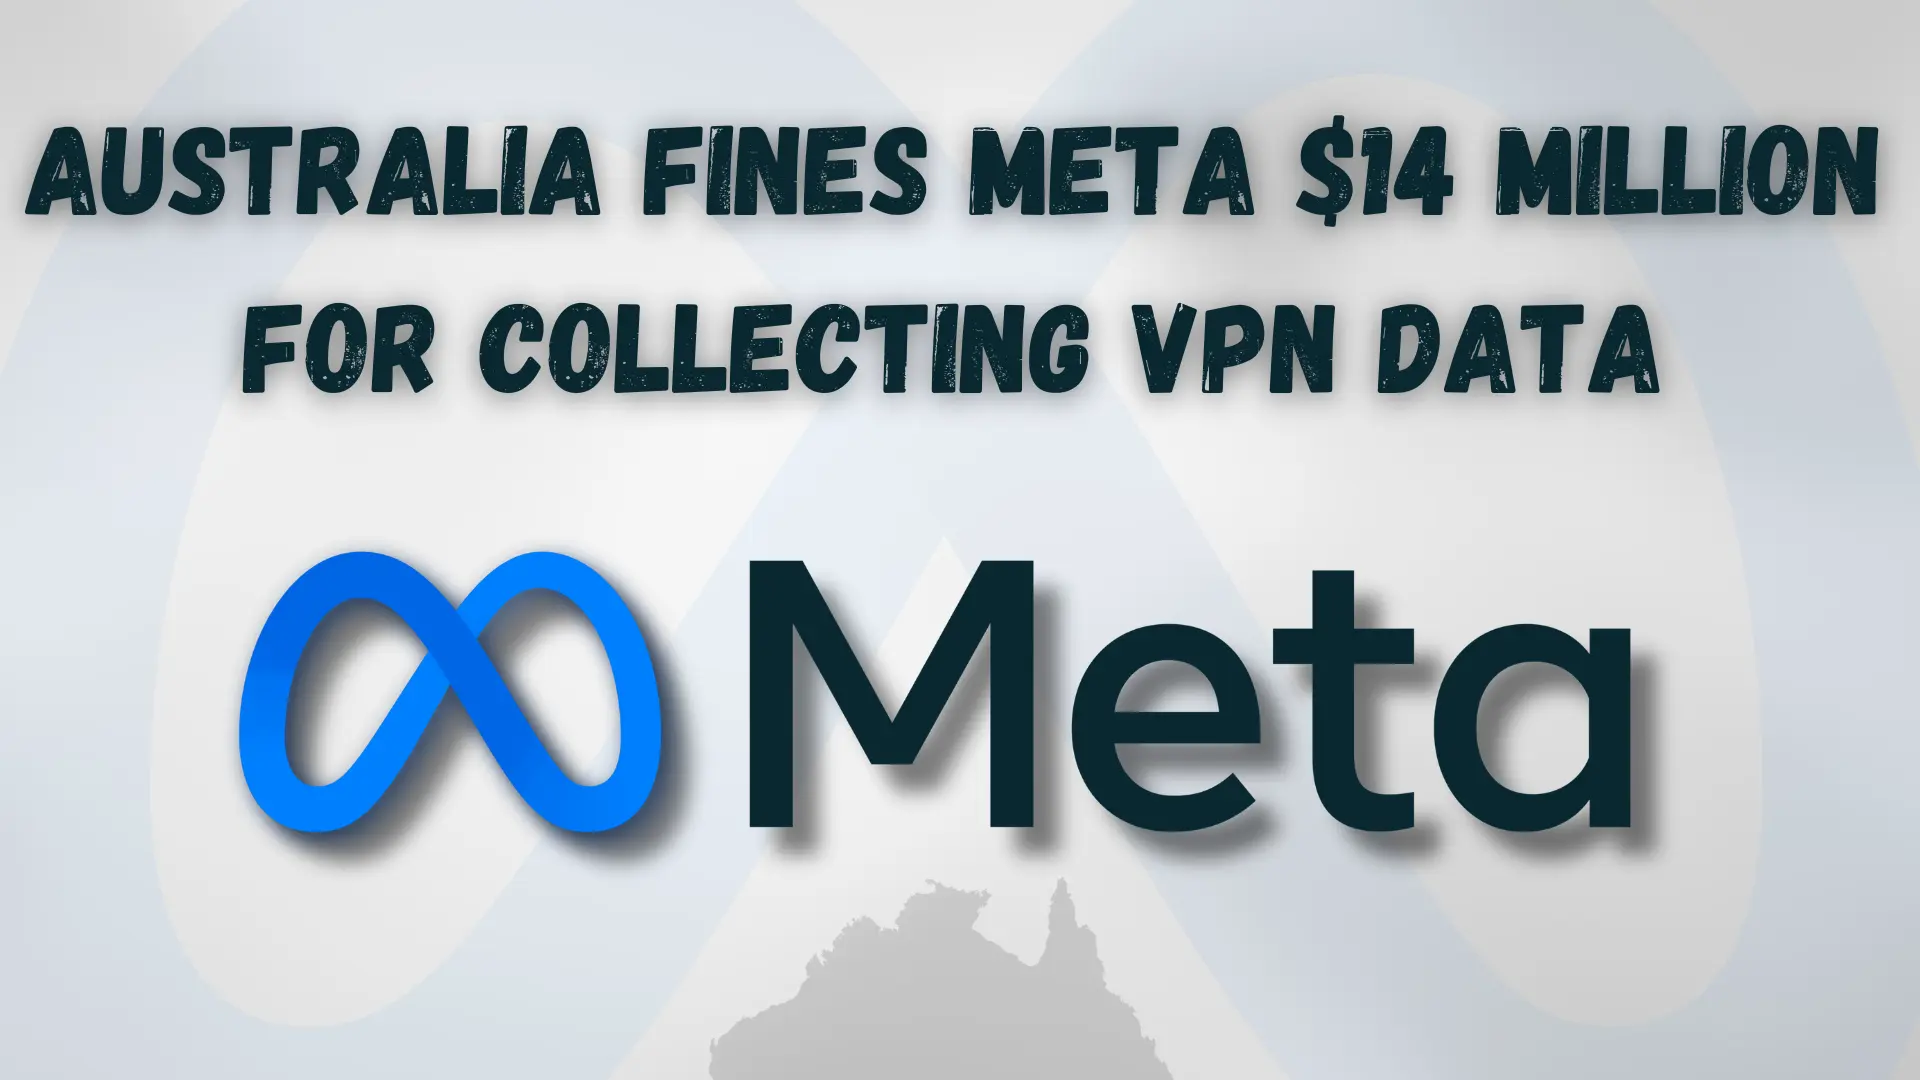 australia fines meta $14 million for collecting vpn data